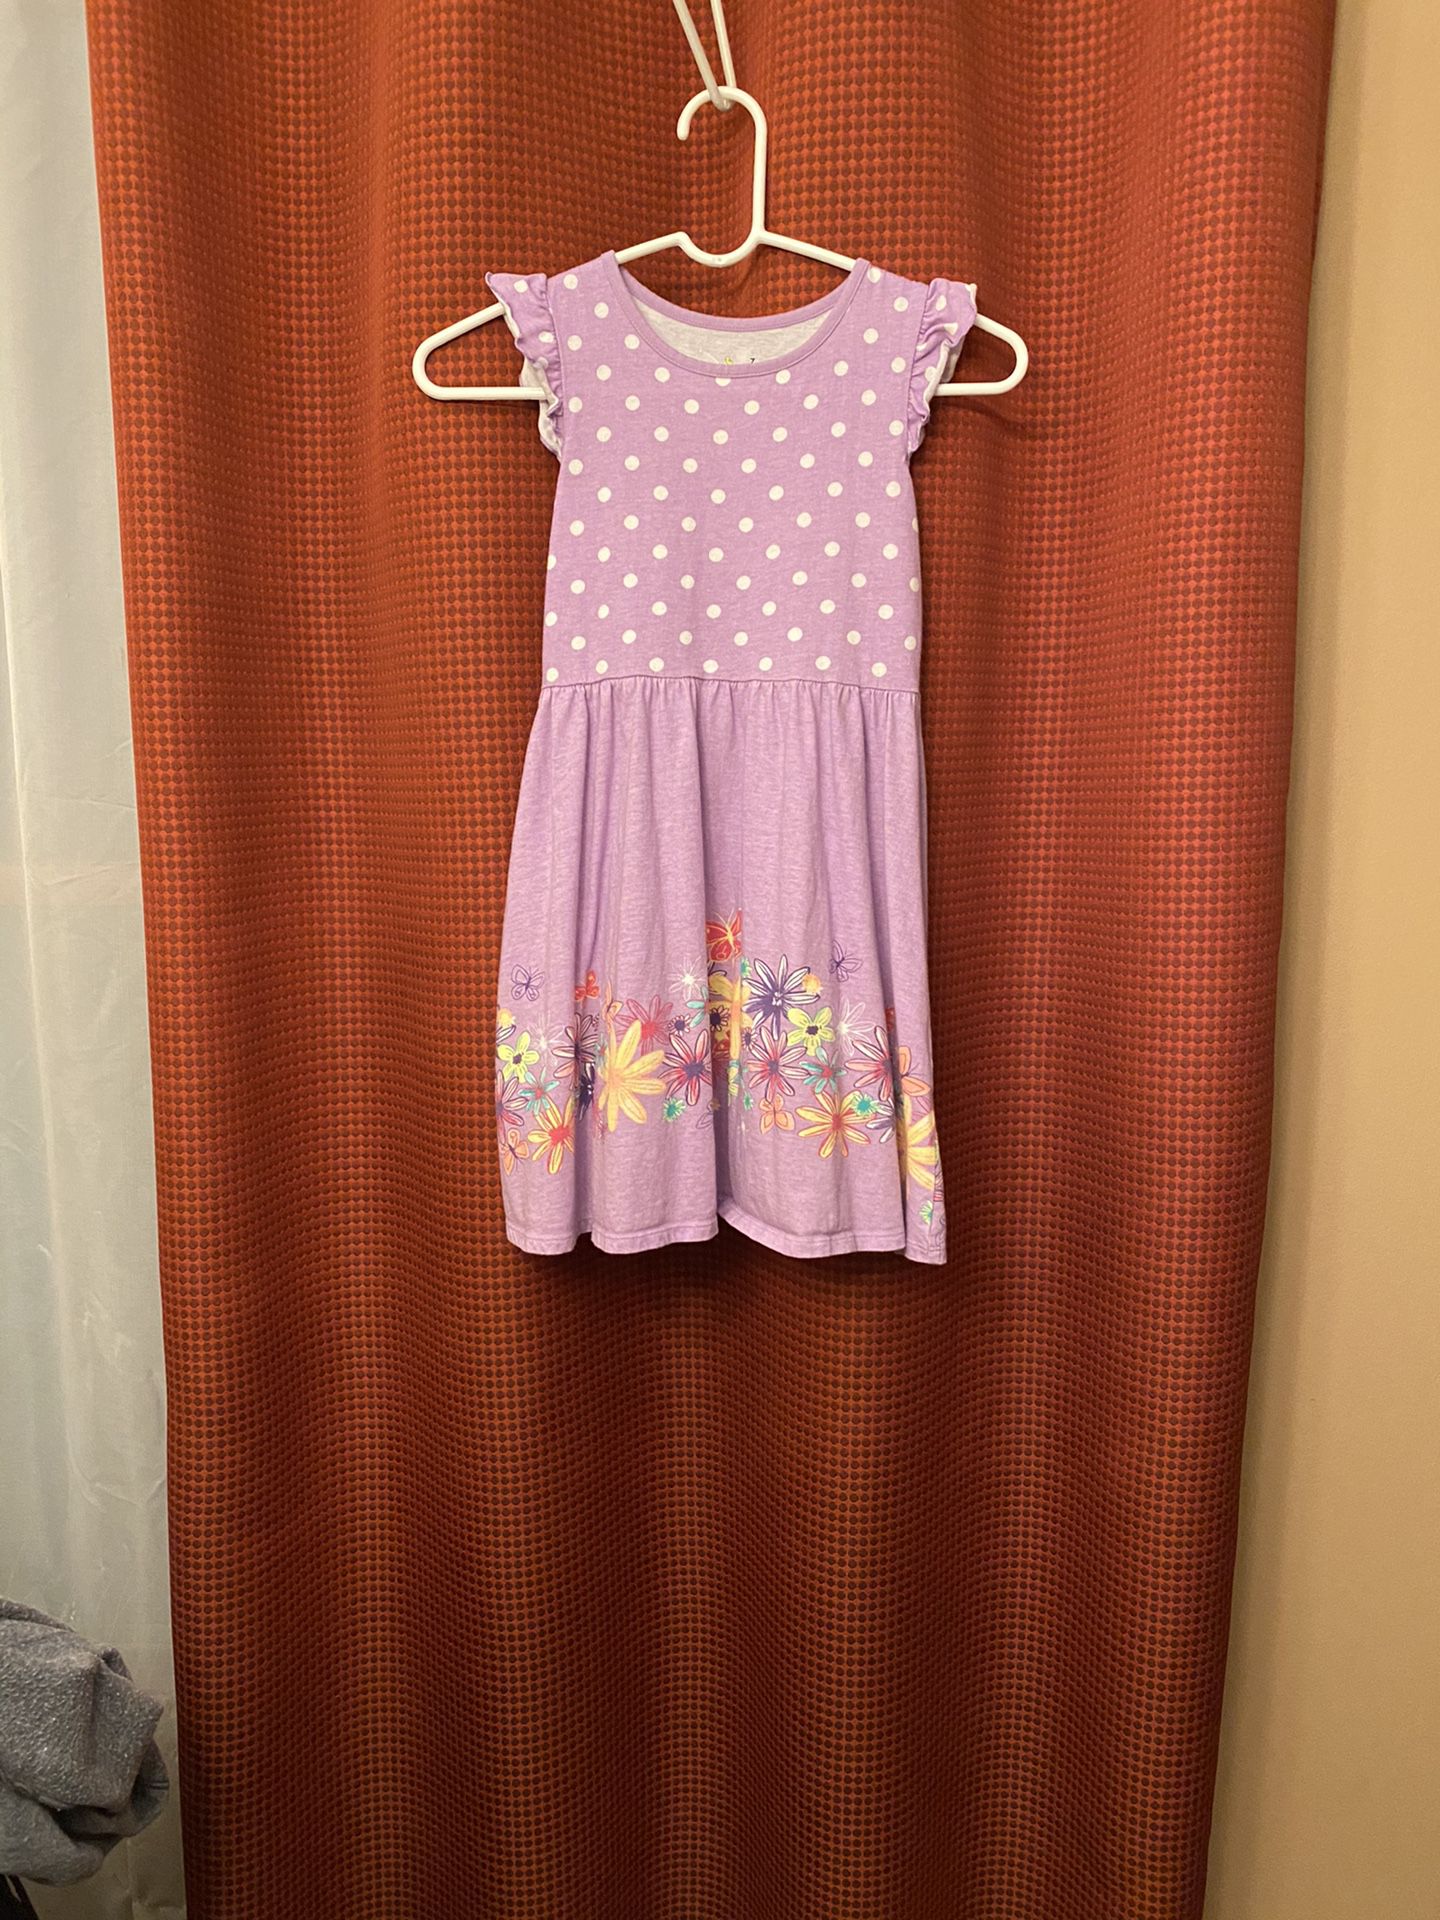 Girl's Purple Dress w/ Floral Design